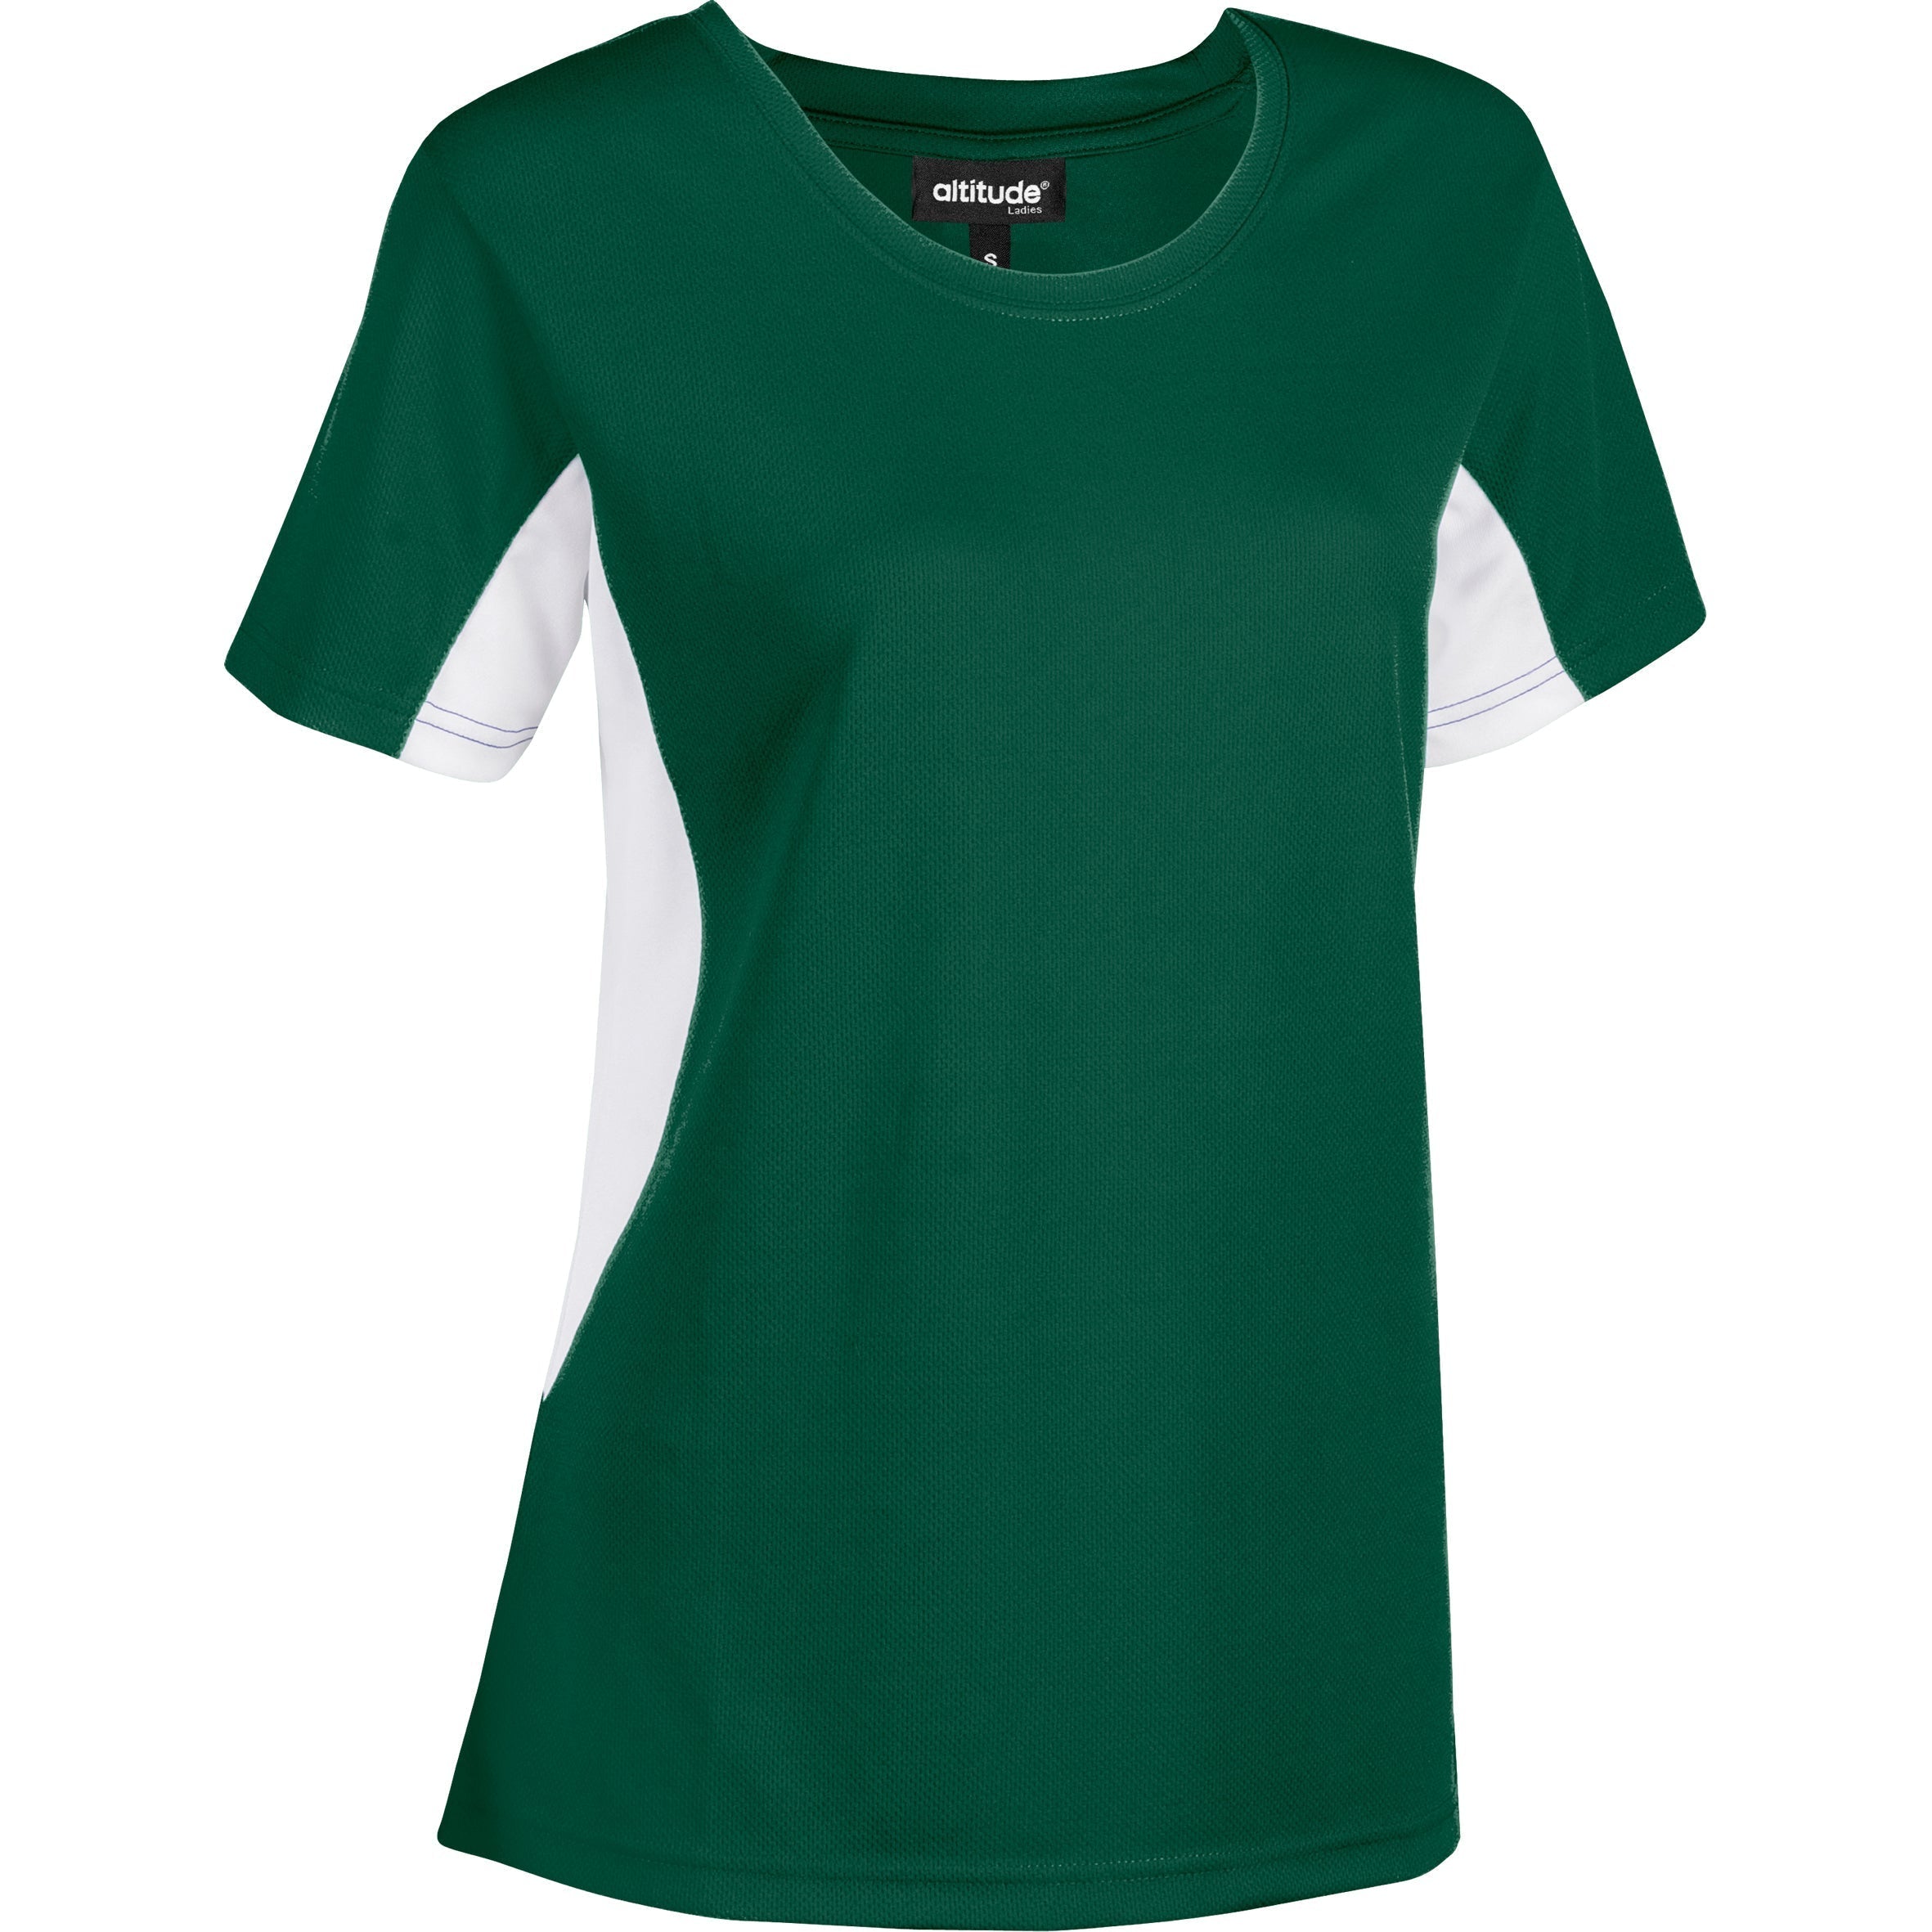 Ladies Championship T-Shirt - Black Only-2XL-Dark Green-DG1